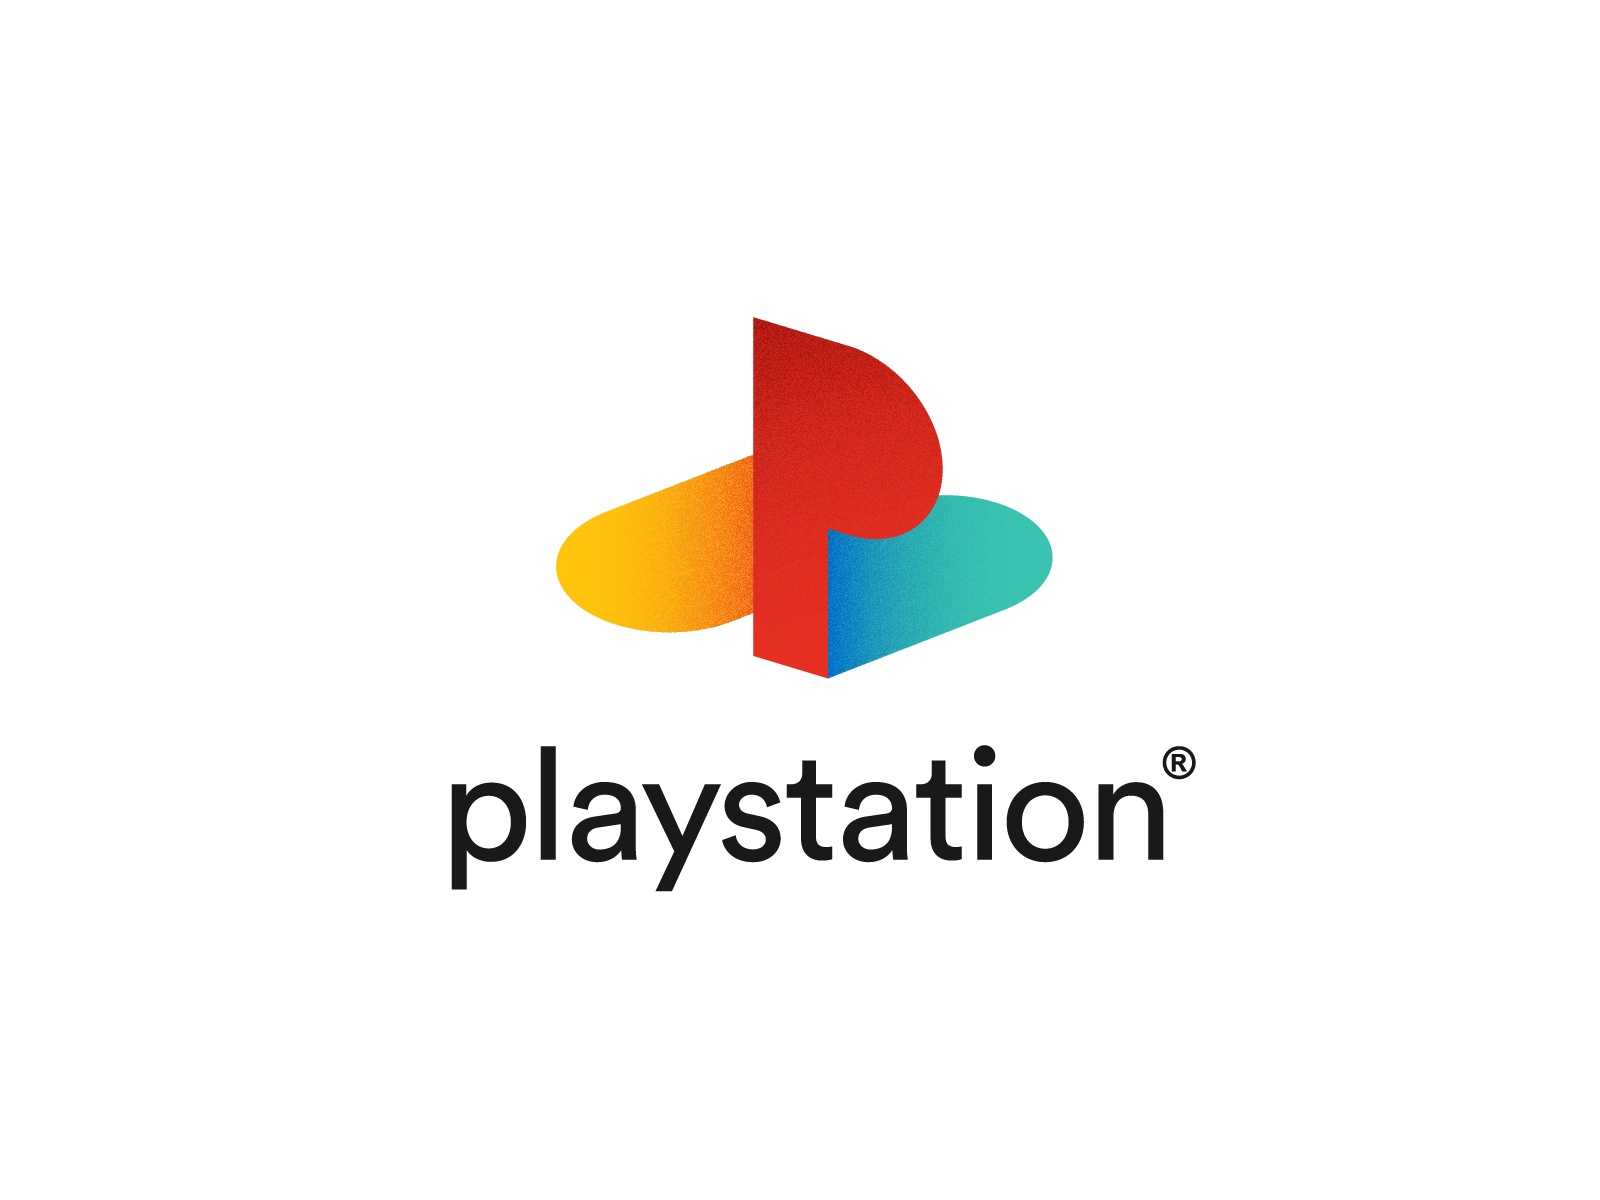 PlayStation Logo Redesign by Linijos by Linijos on Dribbble